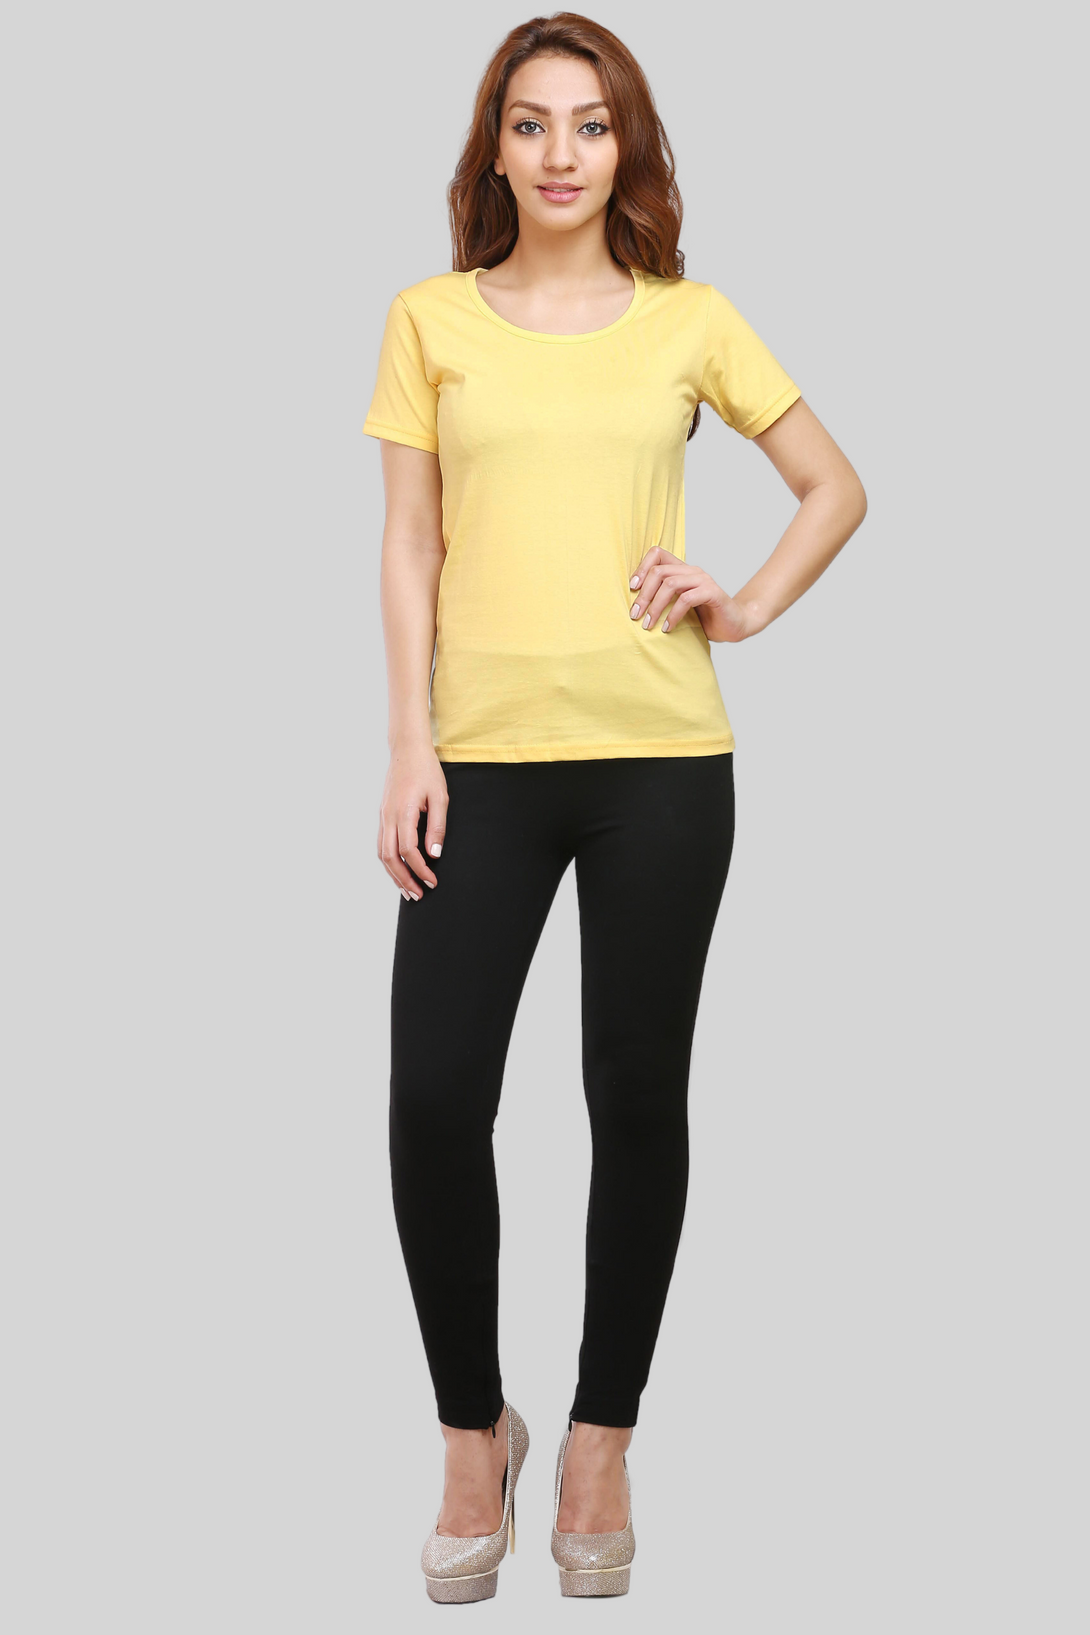 Yellow Scoop Neck T-Shirt For Women - WowWaves - 1